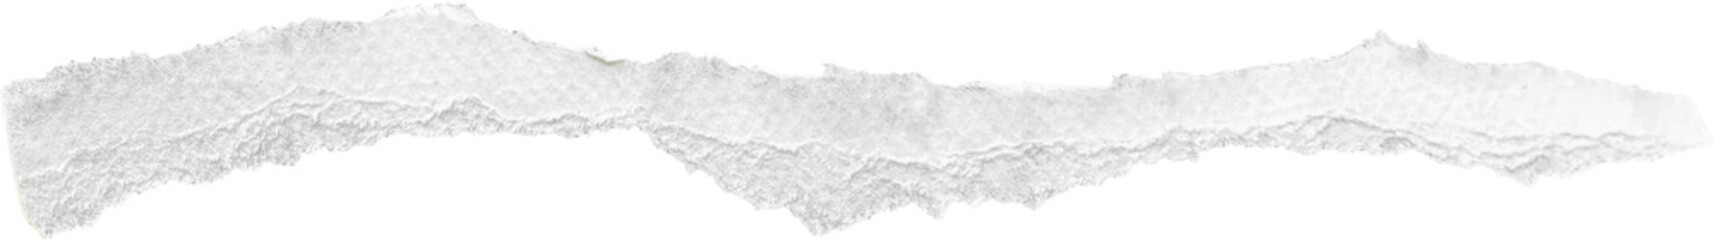 White Torn Paper Strip